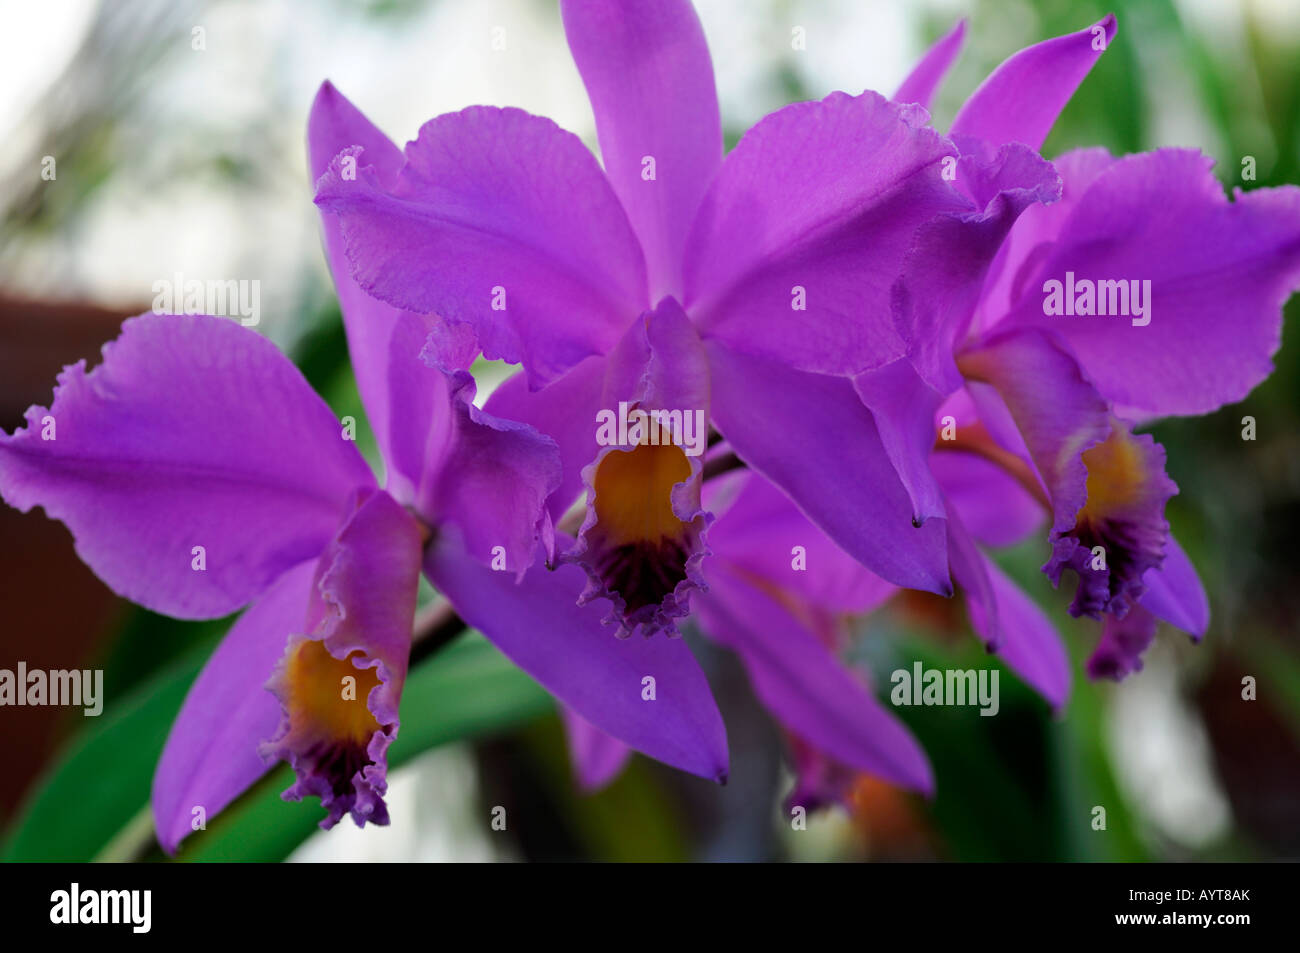 laeliocattleya beaumesnoll roquebrune orchid purple mauve lilac flowers hybrid Stock Photo